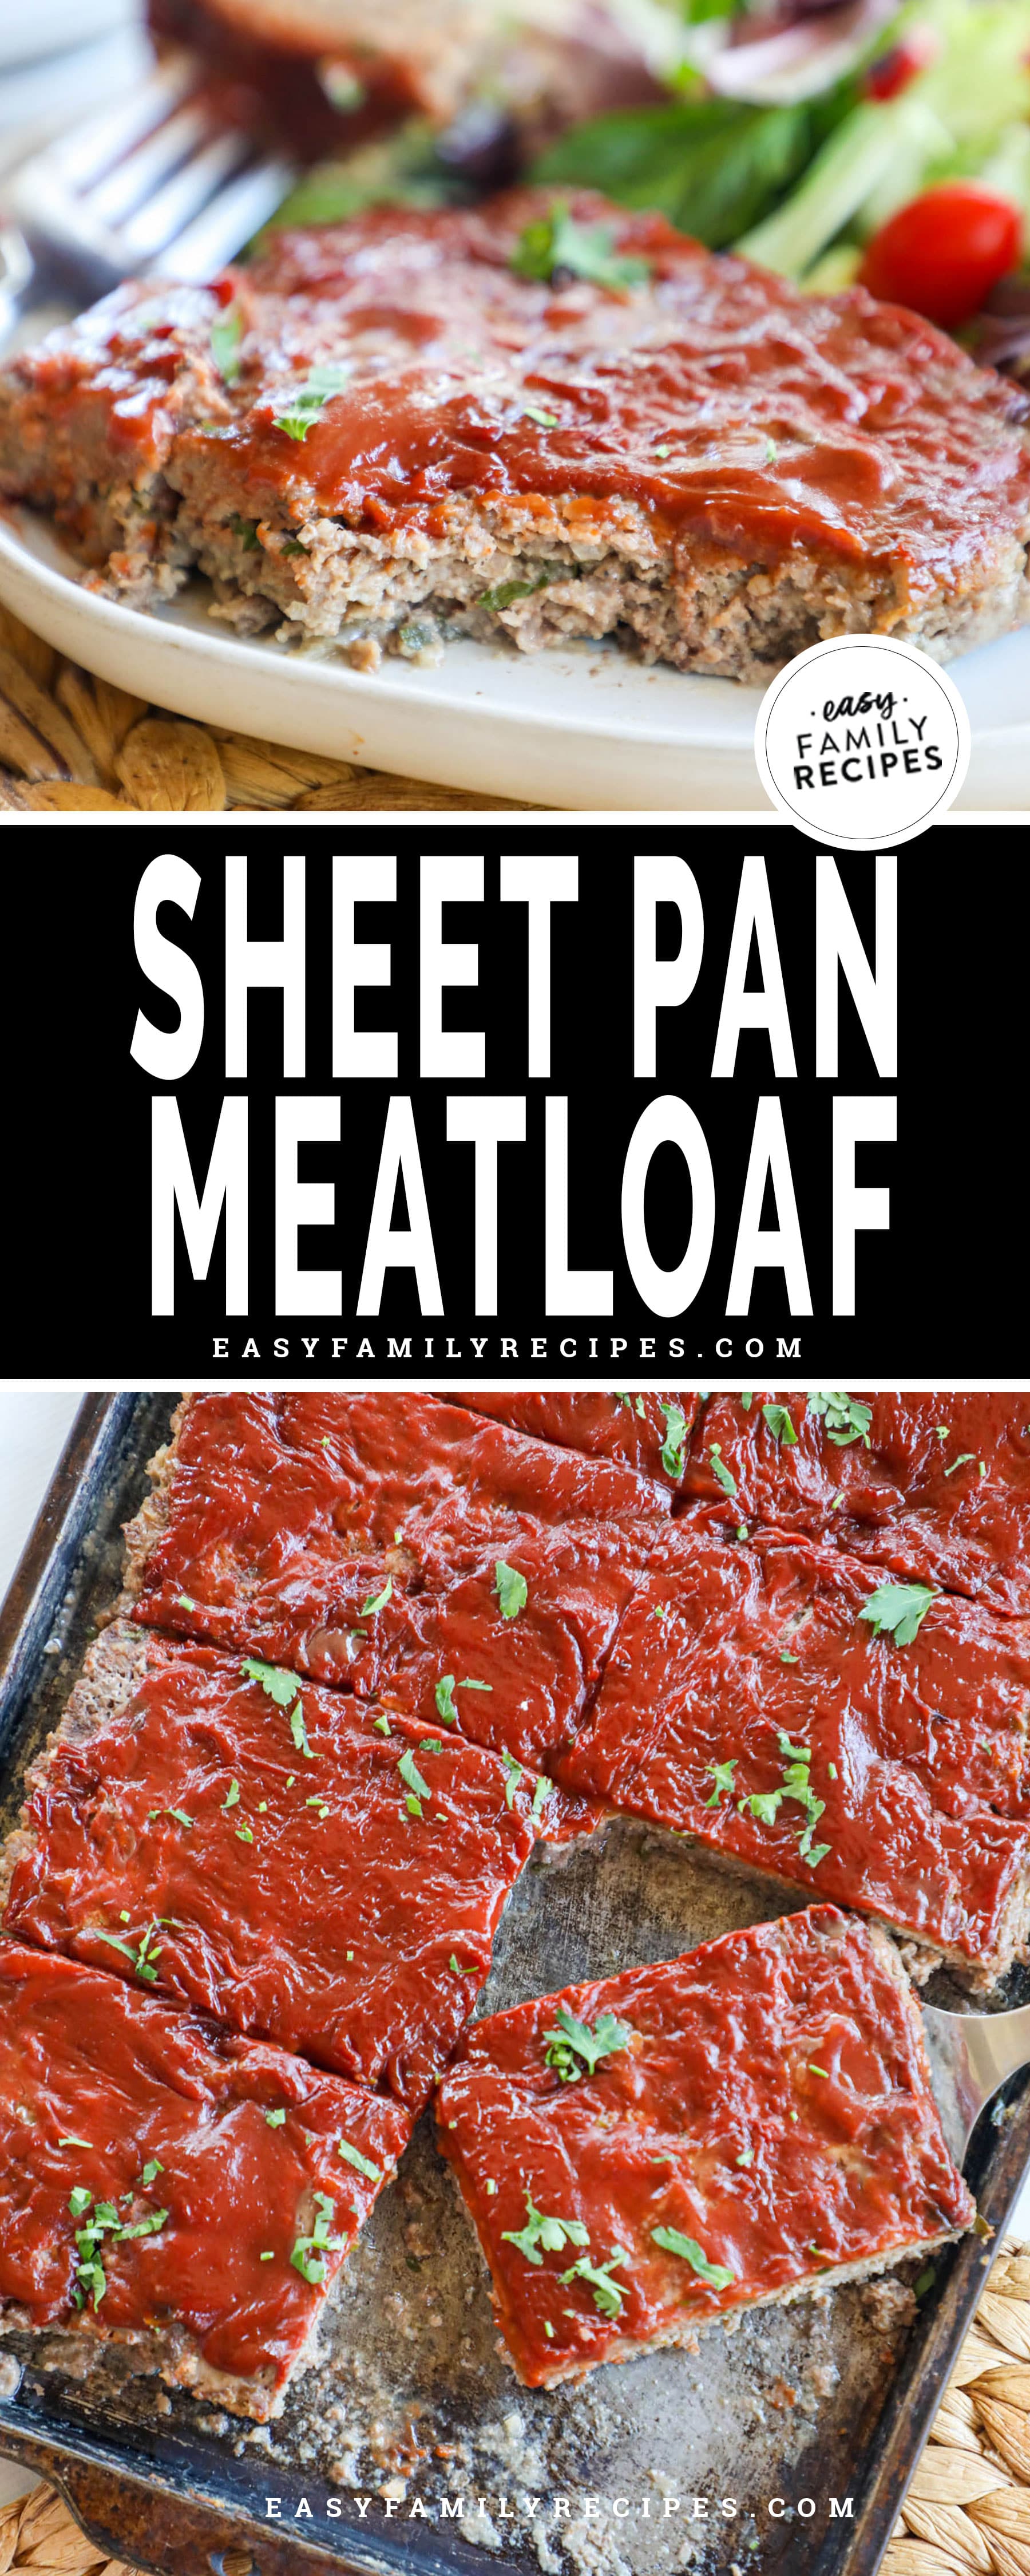 Slice of sheet pan meatloaf on a sheetpan